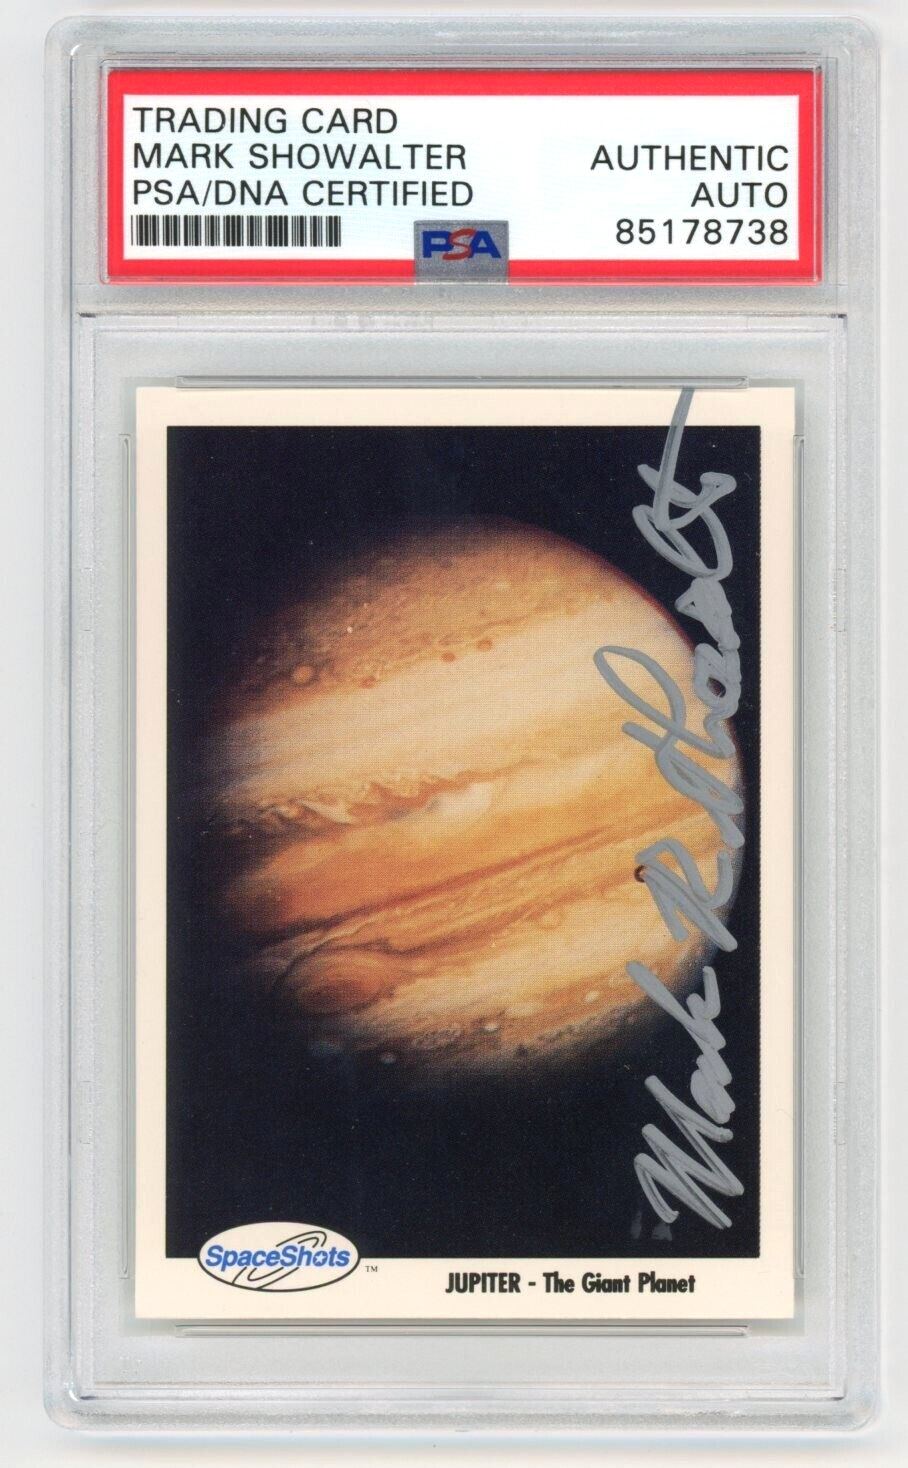 MARK SHOWALTER Signed 1990 Space Shots Jupiter Card #50 - SETI Astronomer -PSA